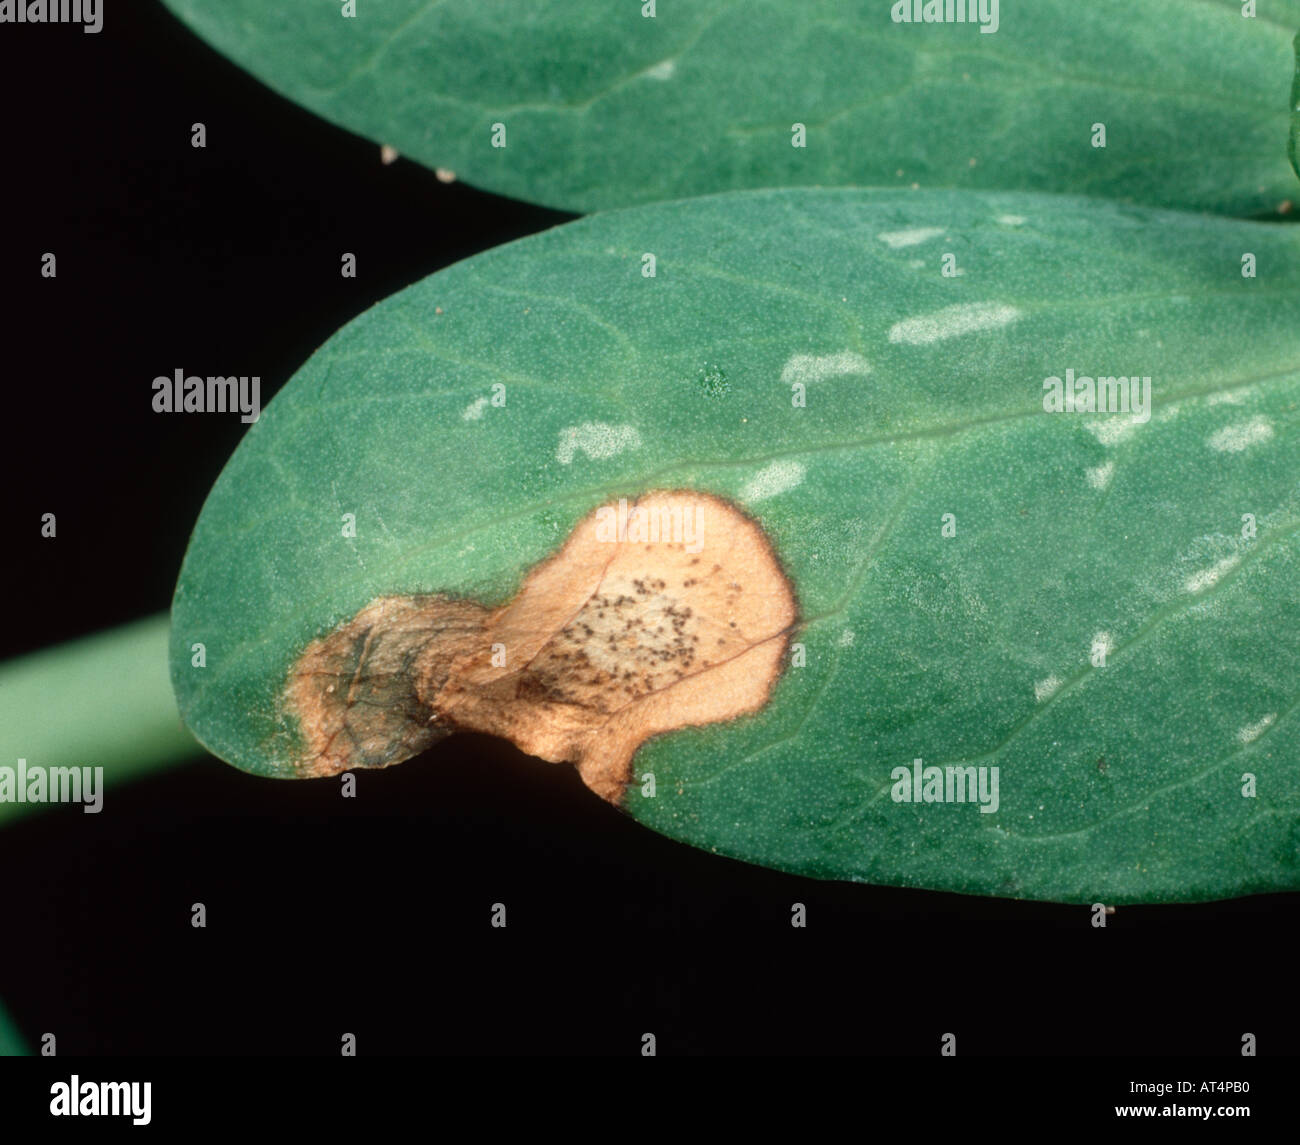 Leaf lesion of ascochyta leaf spot Ascochyta pisi with pycnidia on pea leaf Stock Photo